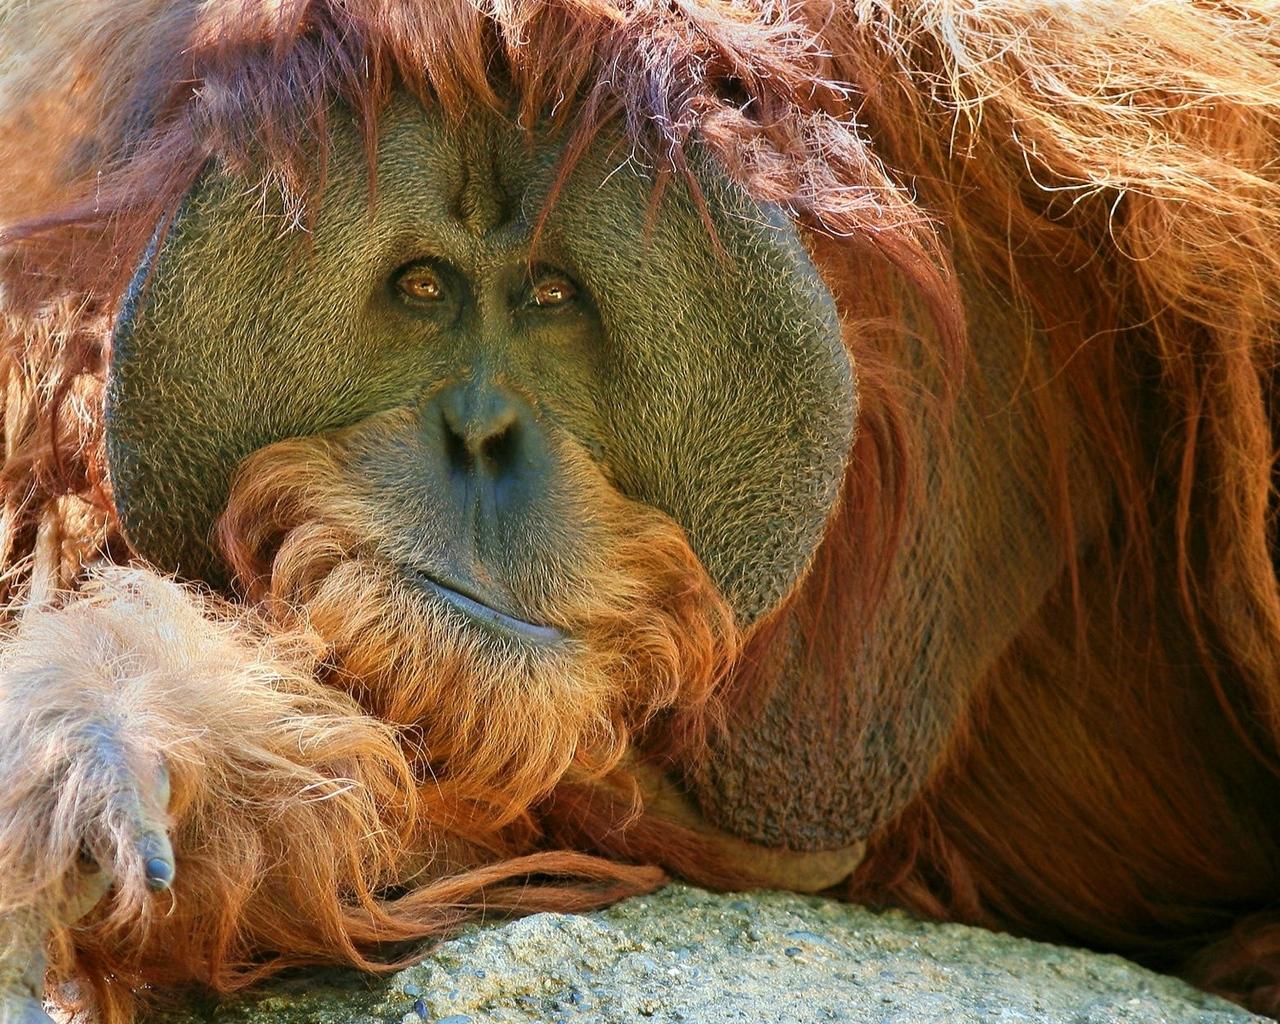 Download wallpaper 1280x1024 orangutan, monkey, pensive standard 5:4